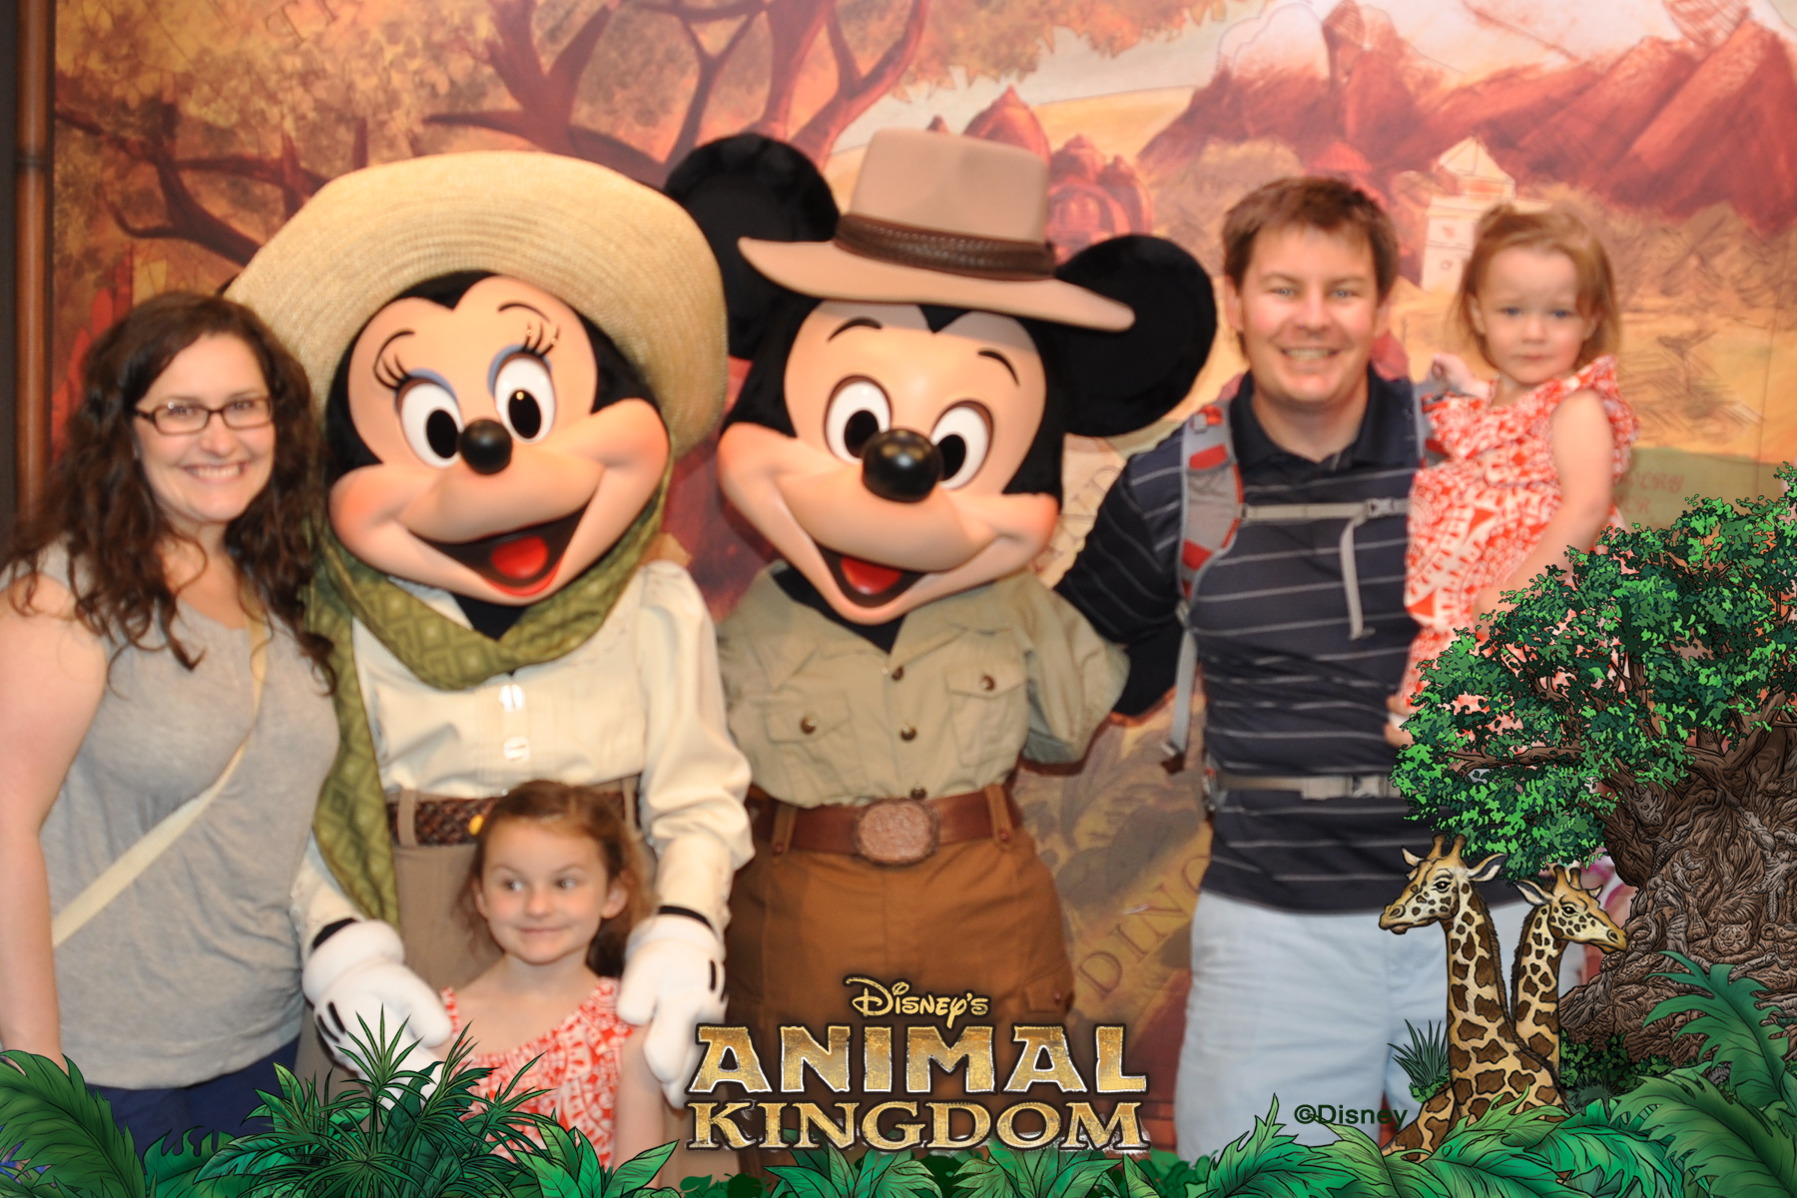 Meeting Safari Minnie and Mickey!